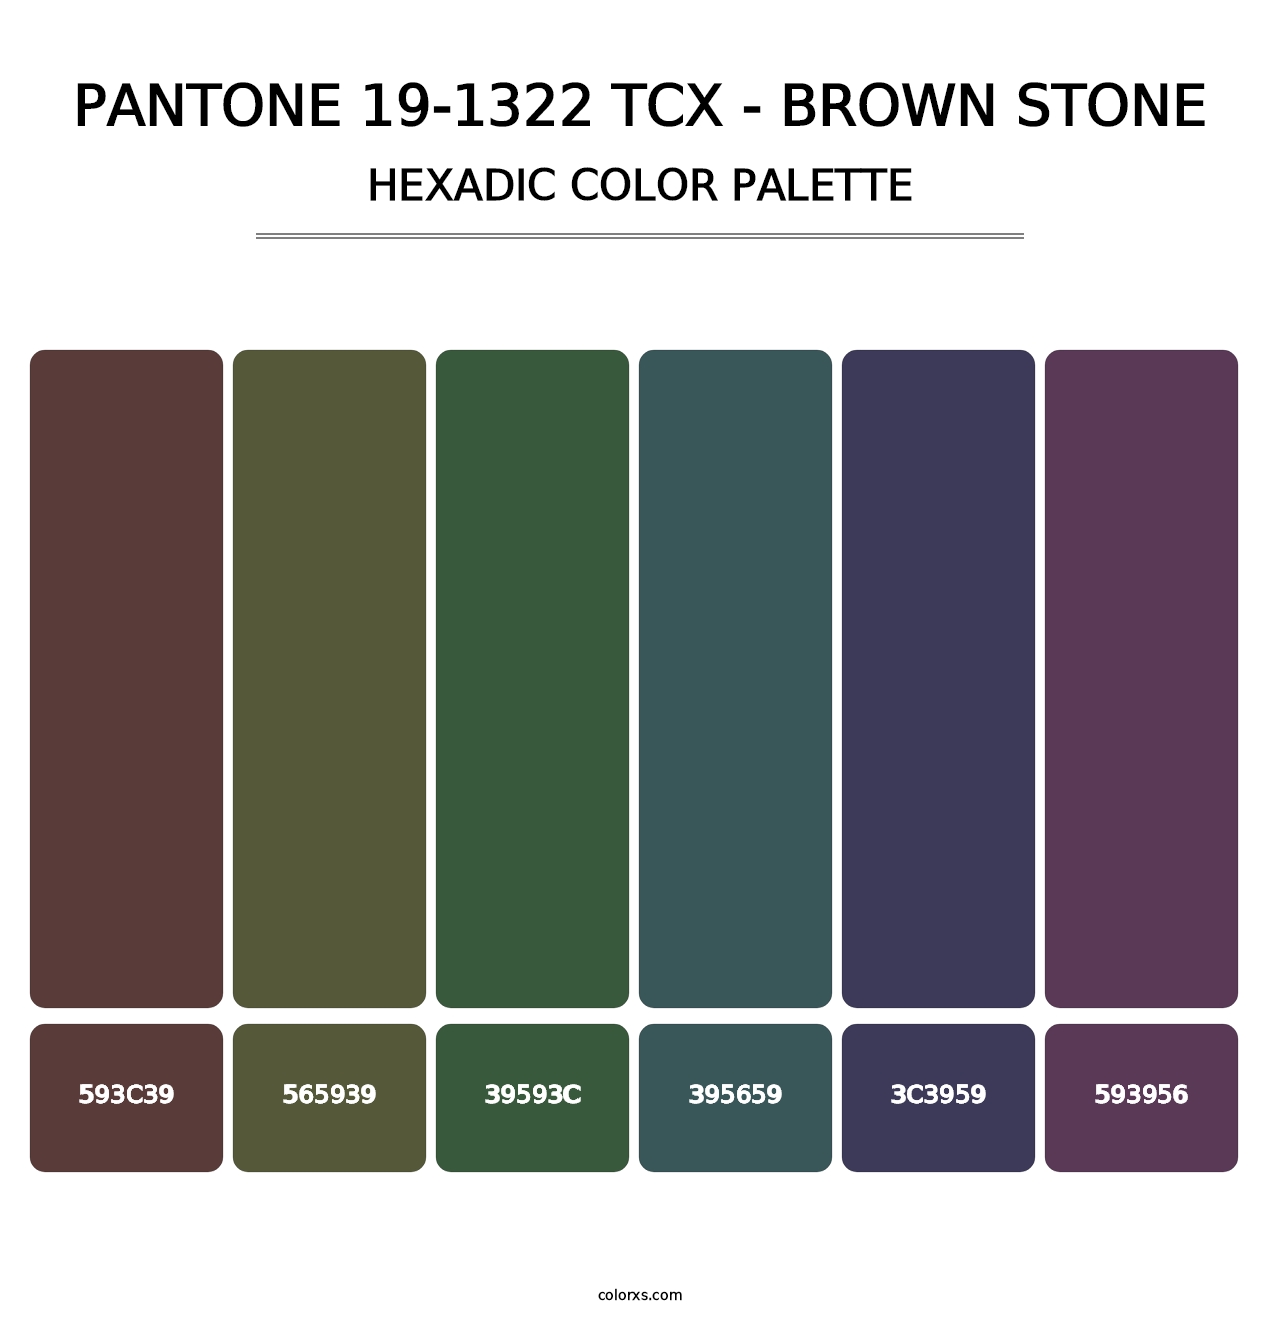 PANTONE 19-1322 TCX - Brown Stone - Hexadic Color Palette